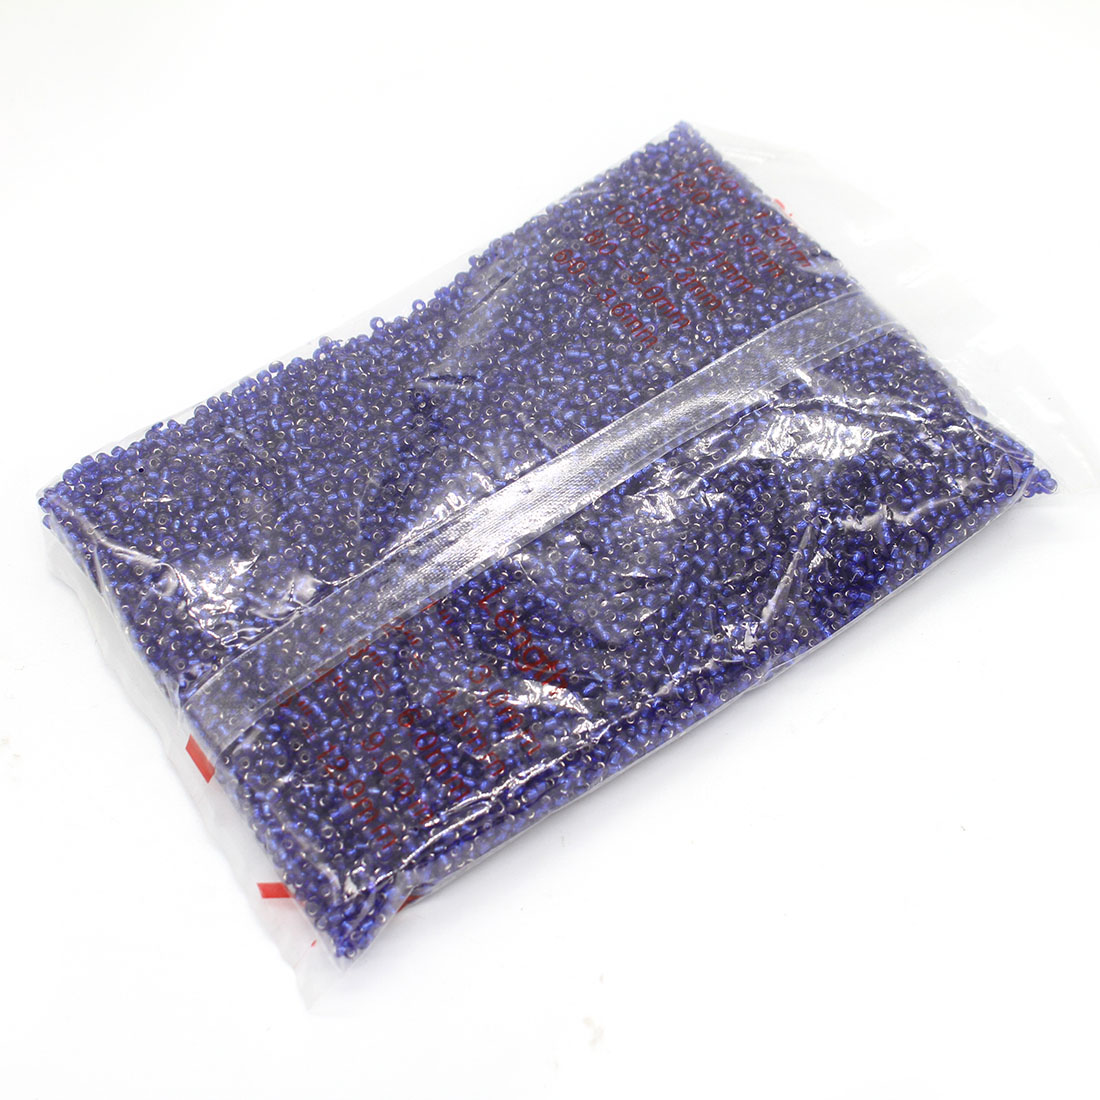 Deep purple 3mm 10,000 packs